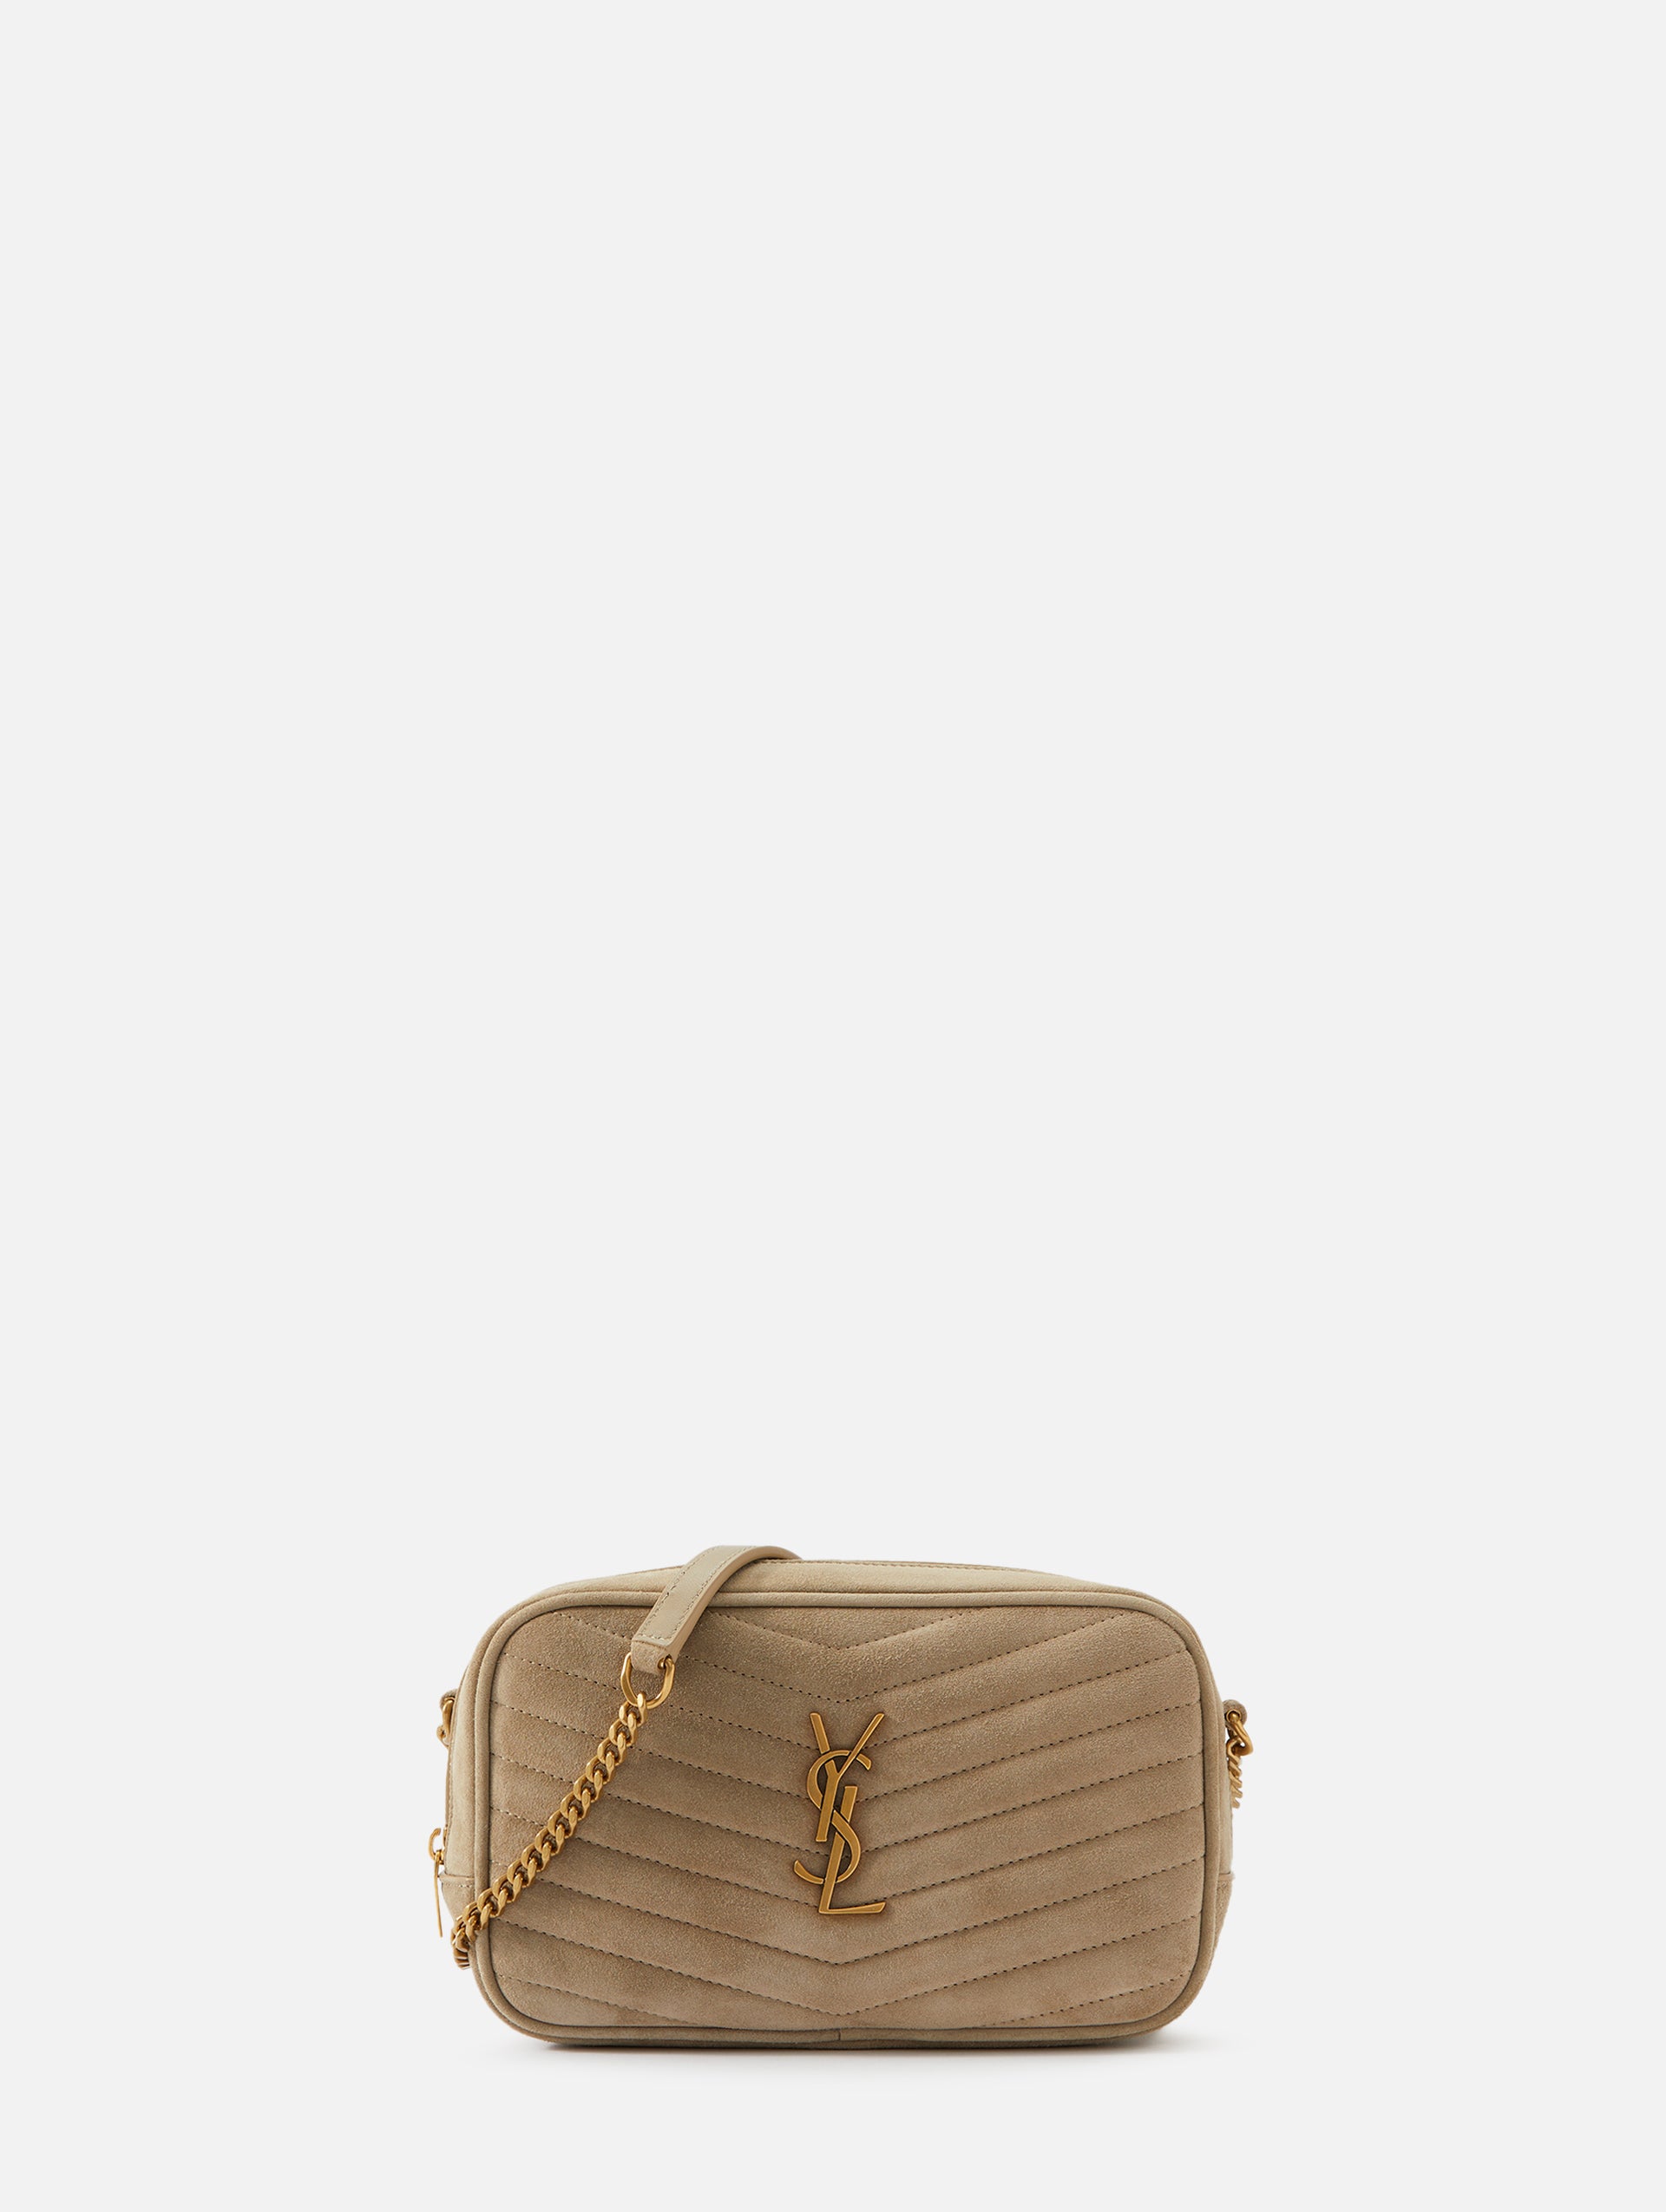 Envelope Handbag Collection for Women | Saint Laurent | YSL UK